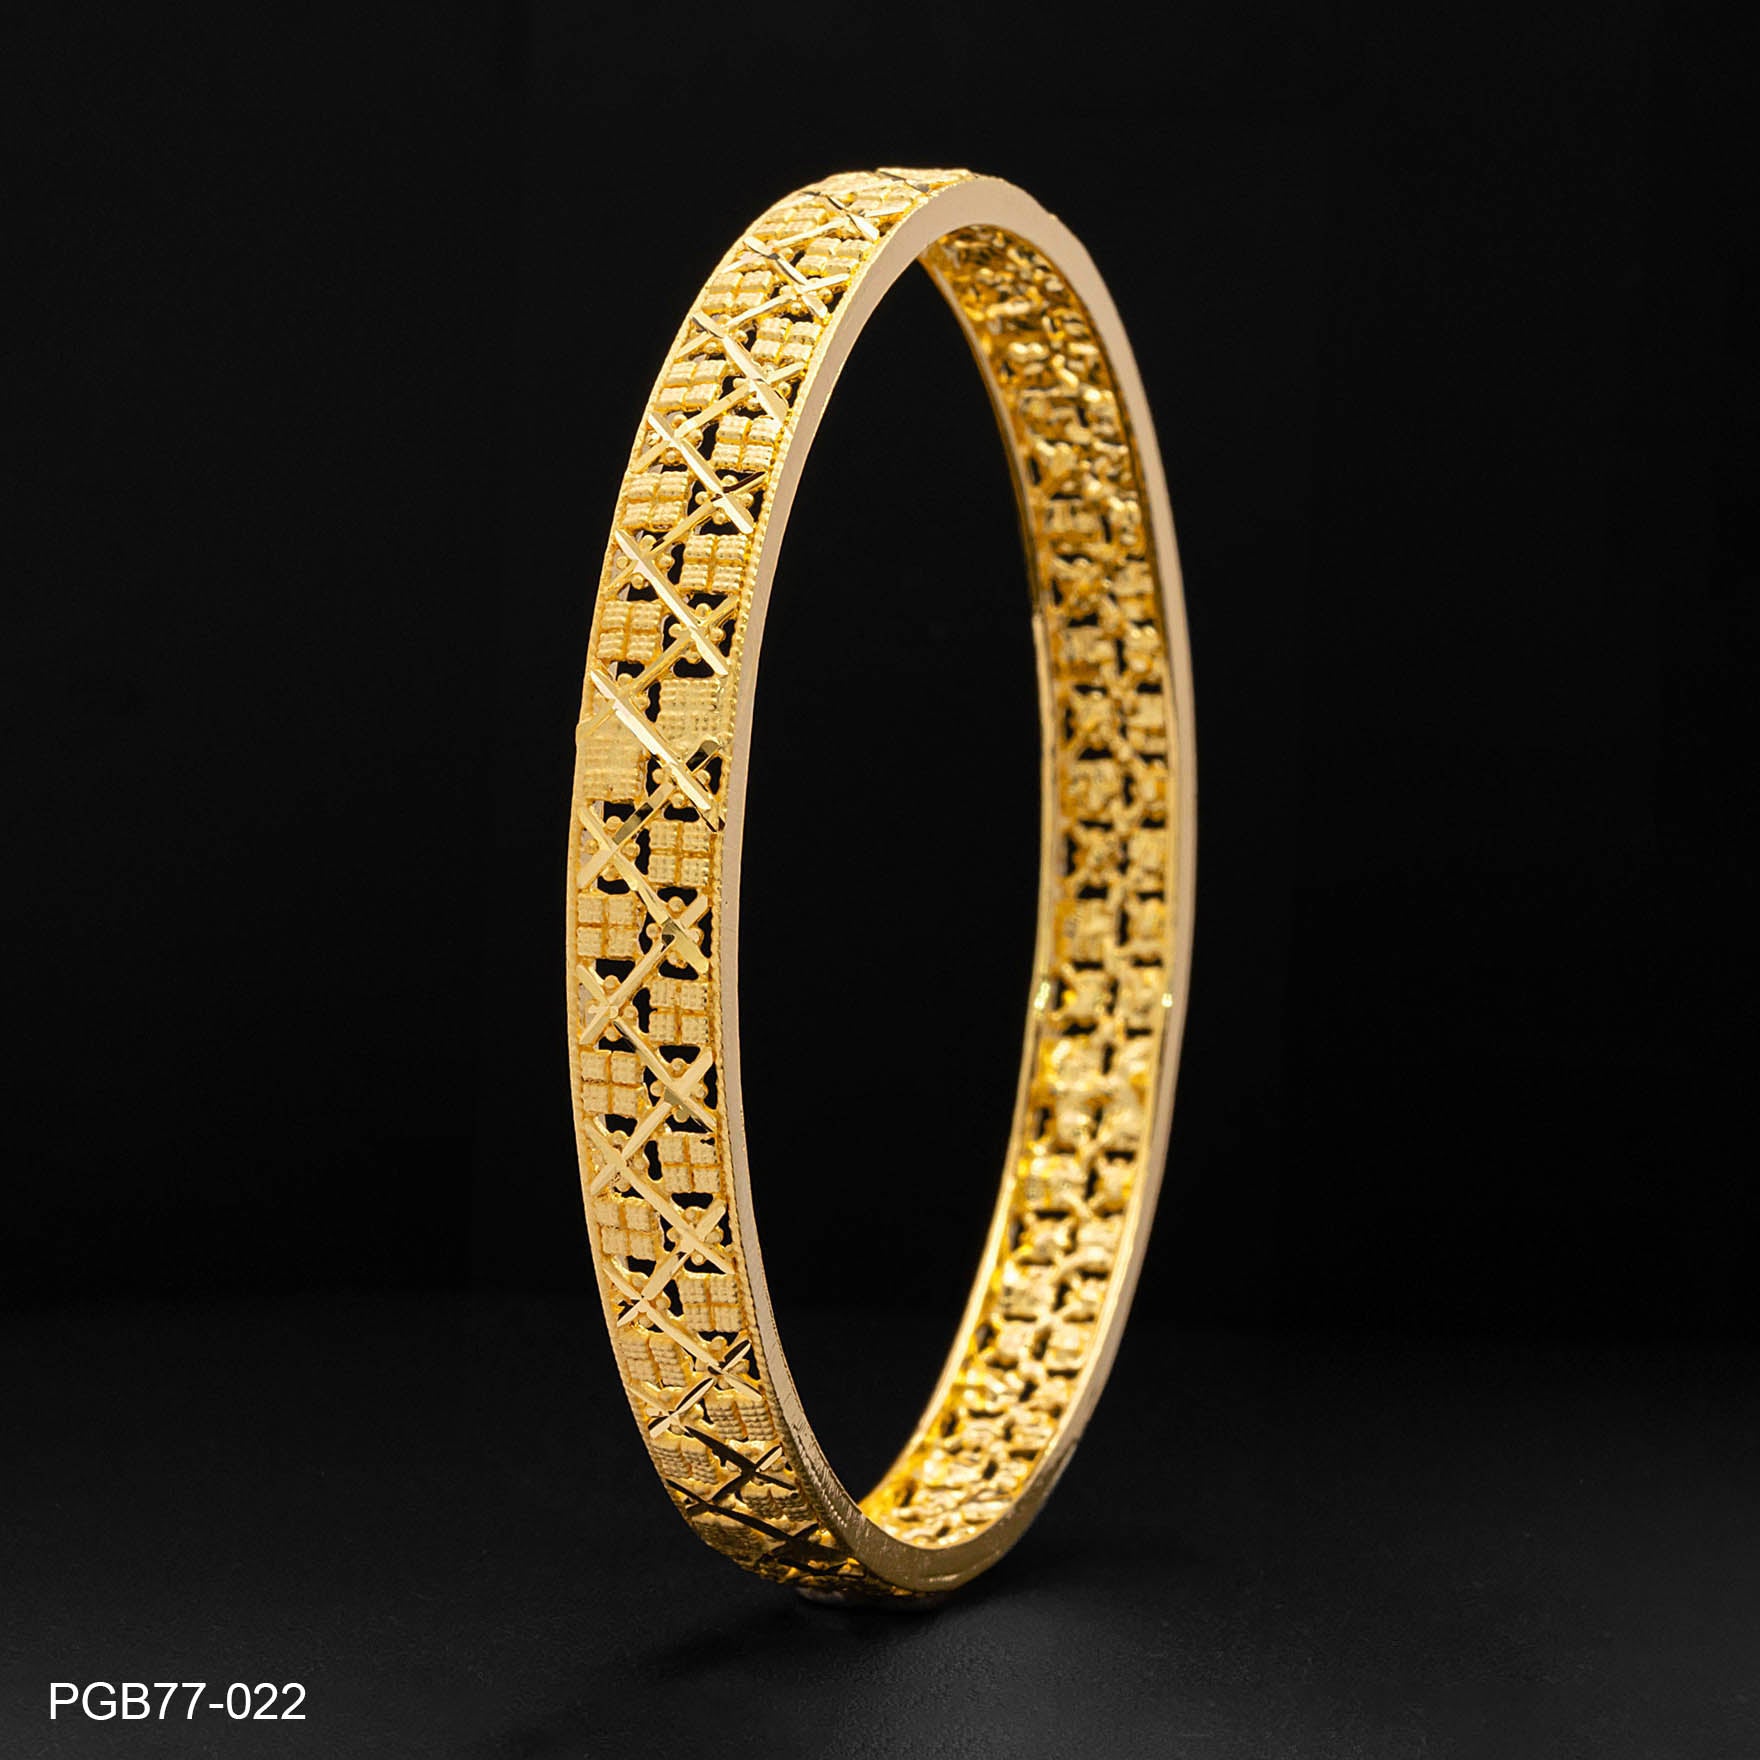 24ct Heavy Gold Plated Boho Style Bangle PGB77-022